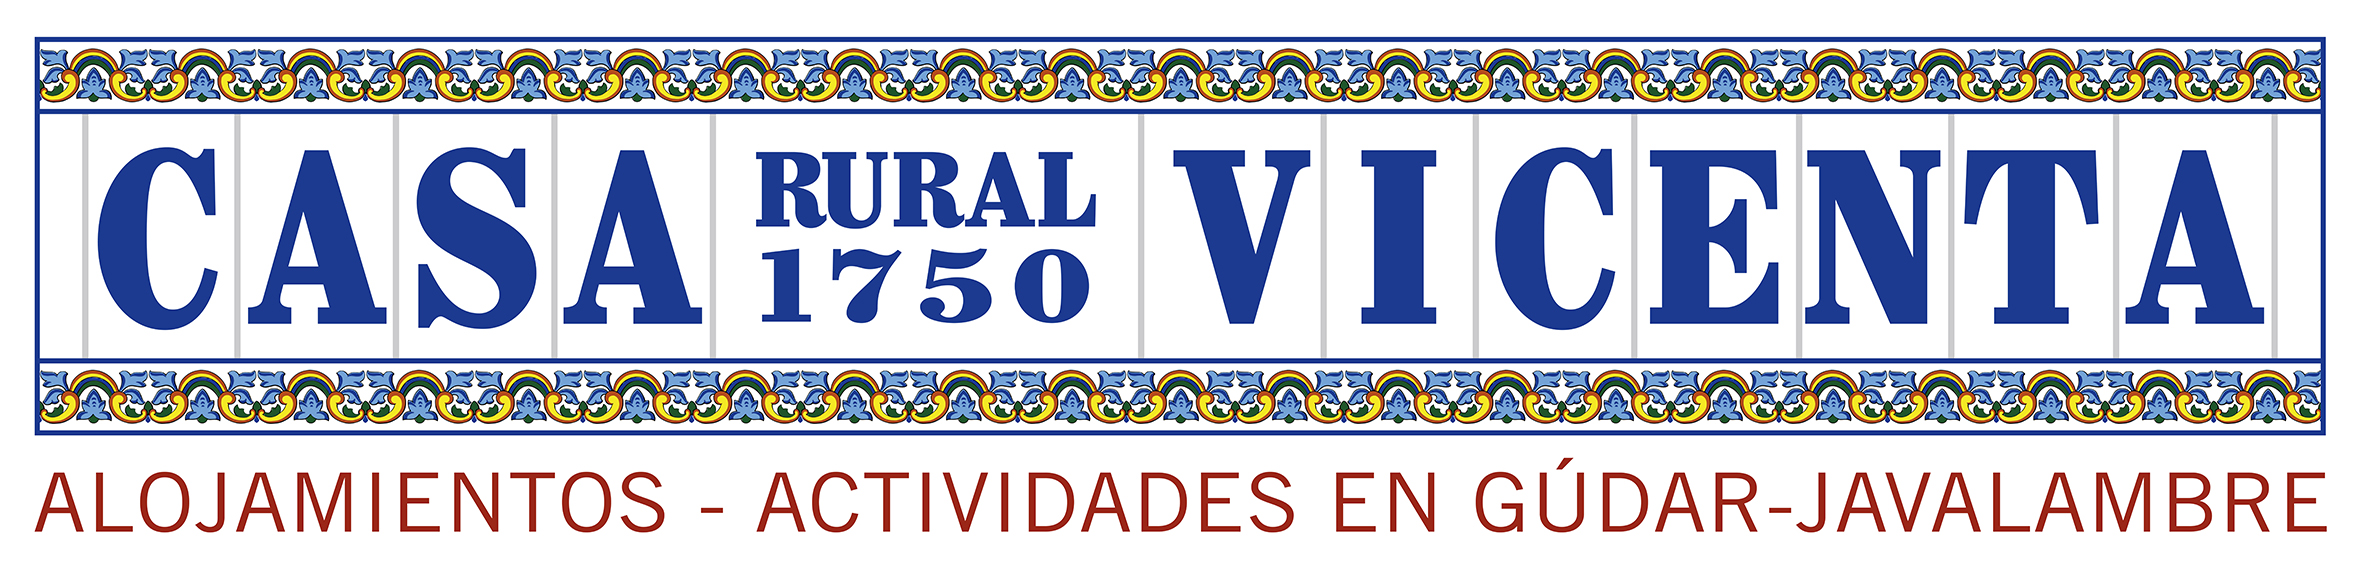 Logo Casa Rural Vicenta 1750